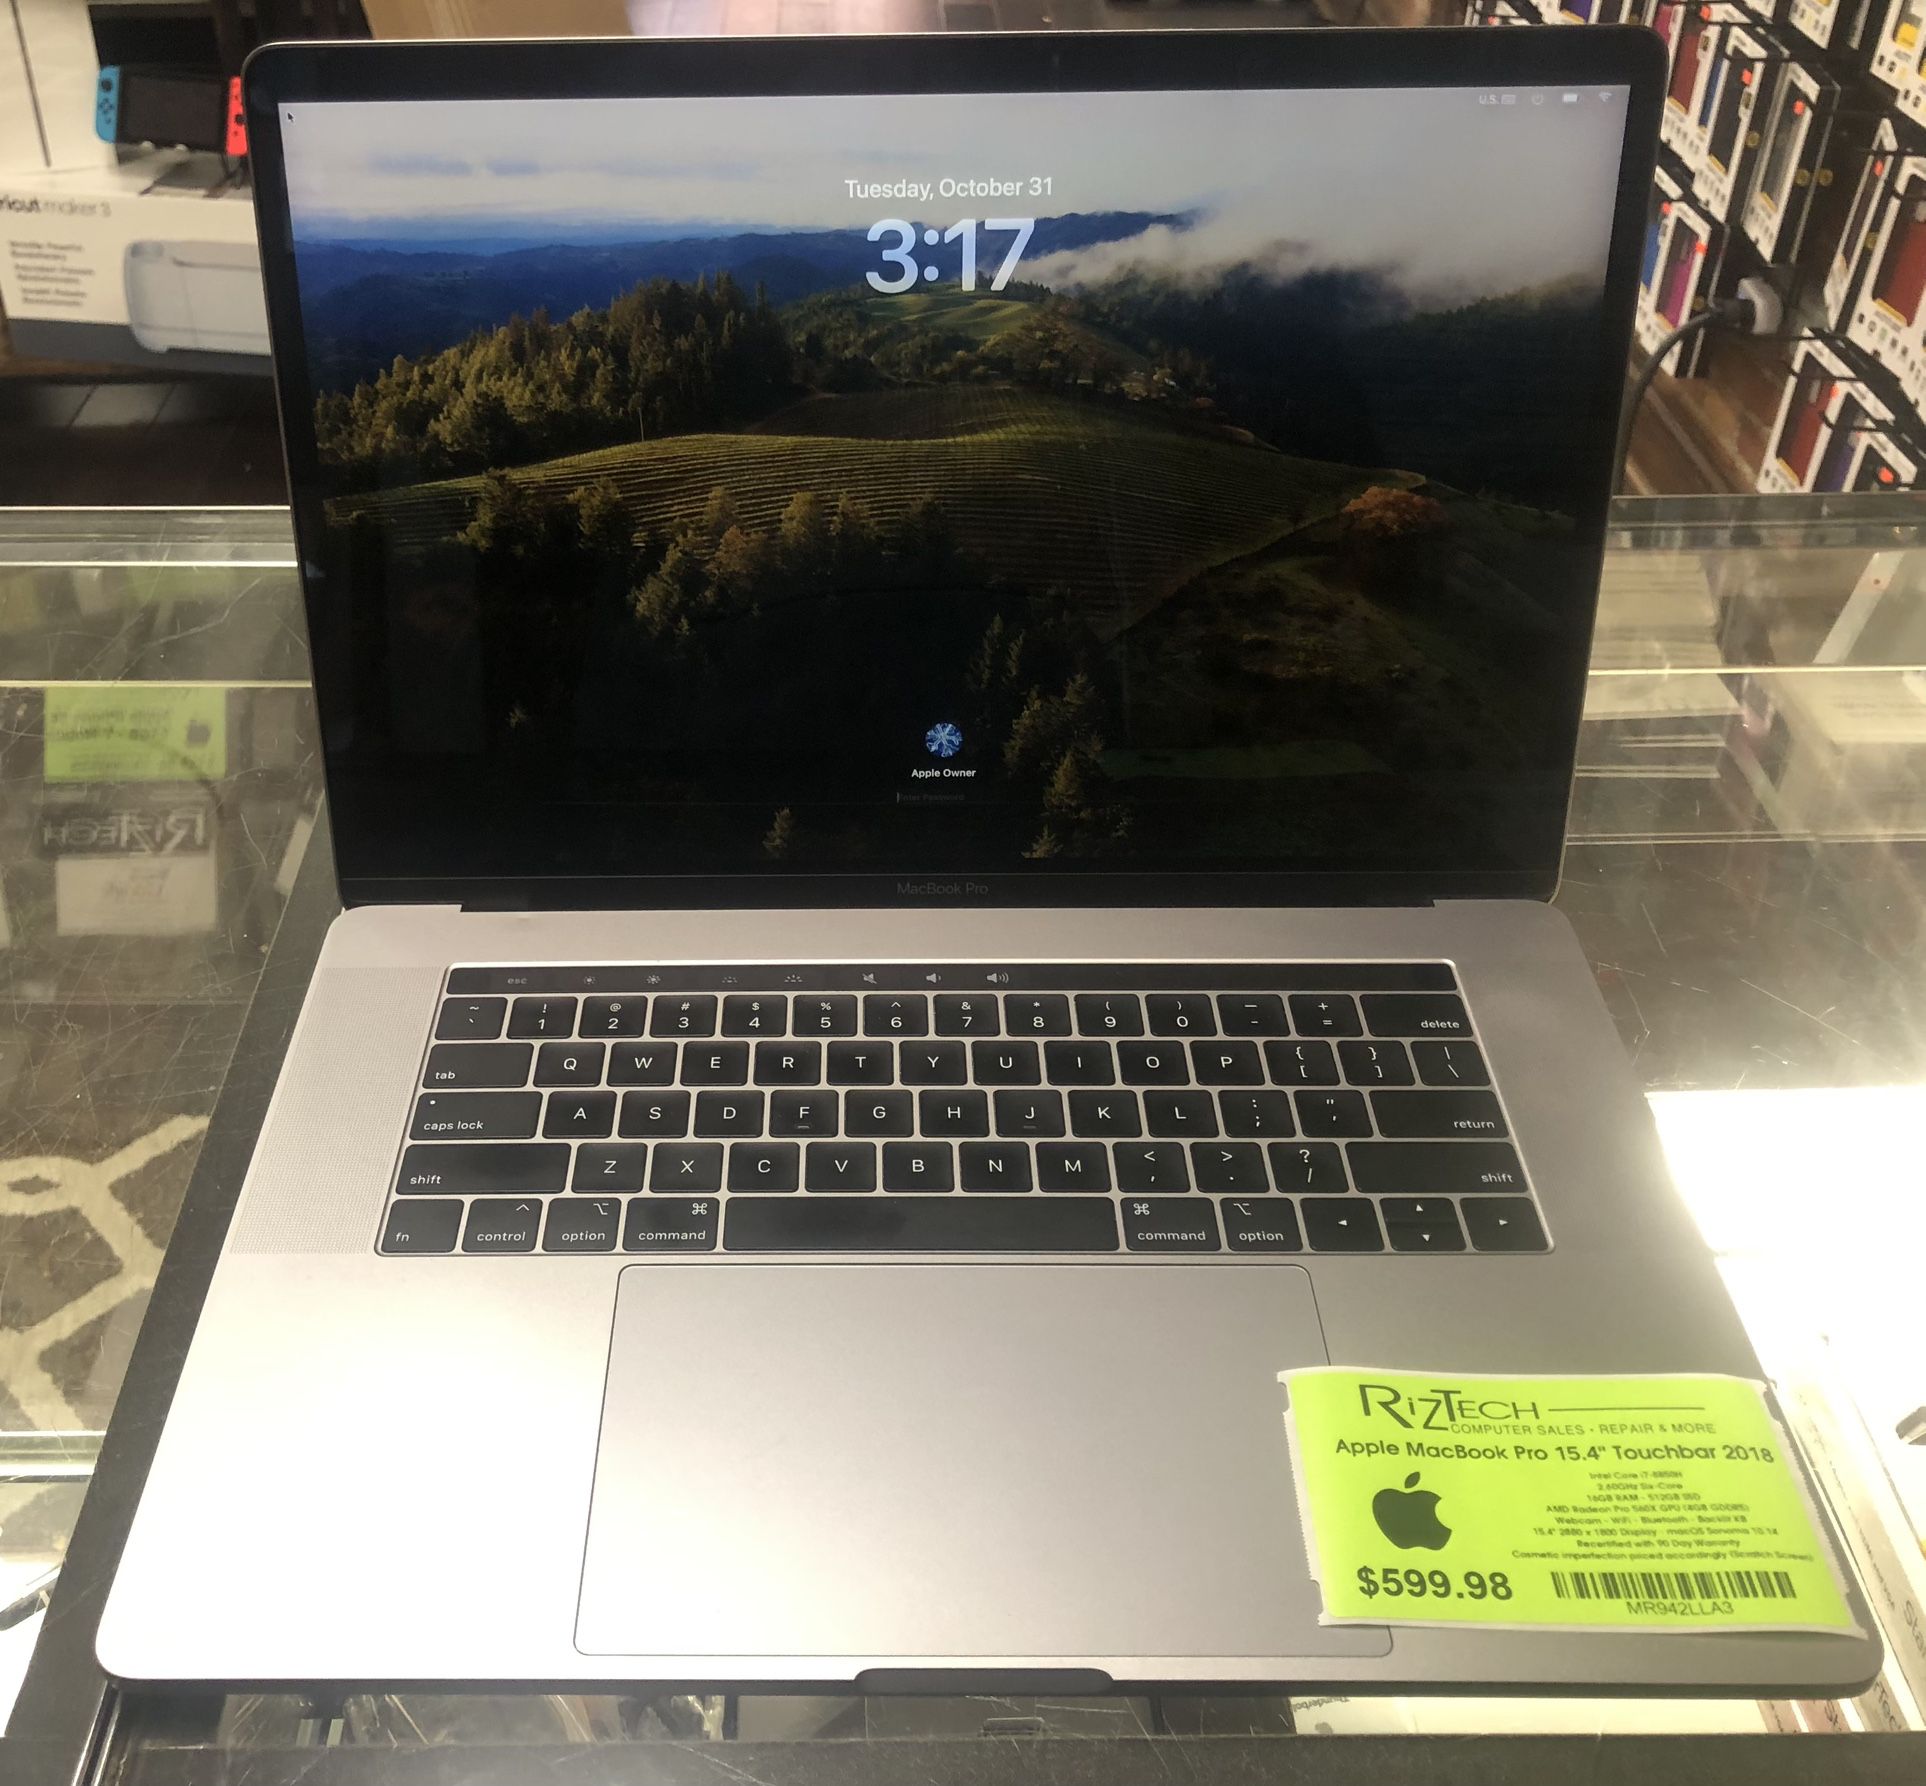 Apple MacBook Pro 15.4" Touchbar 2018